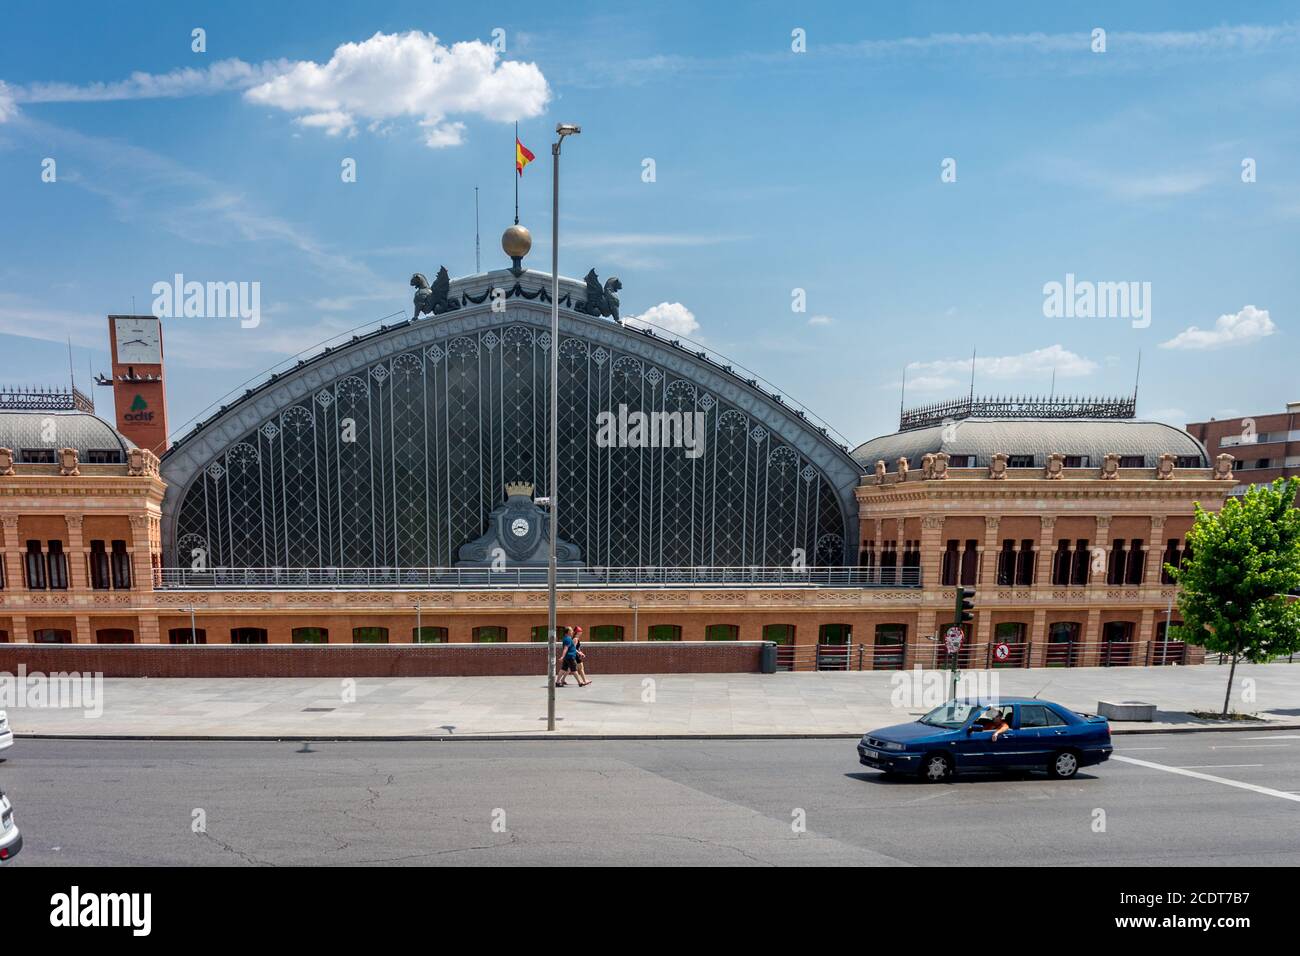 Madrid, Spain - June 17 : The Atocha railway station  on June 17, 2017. A car passes by the railway station Stock Photo